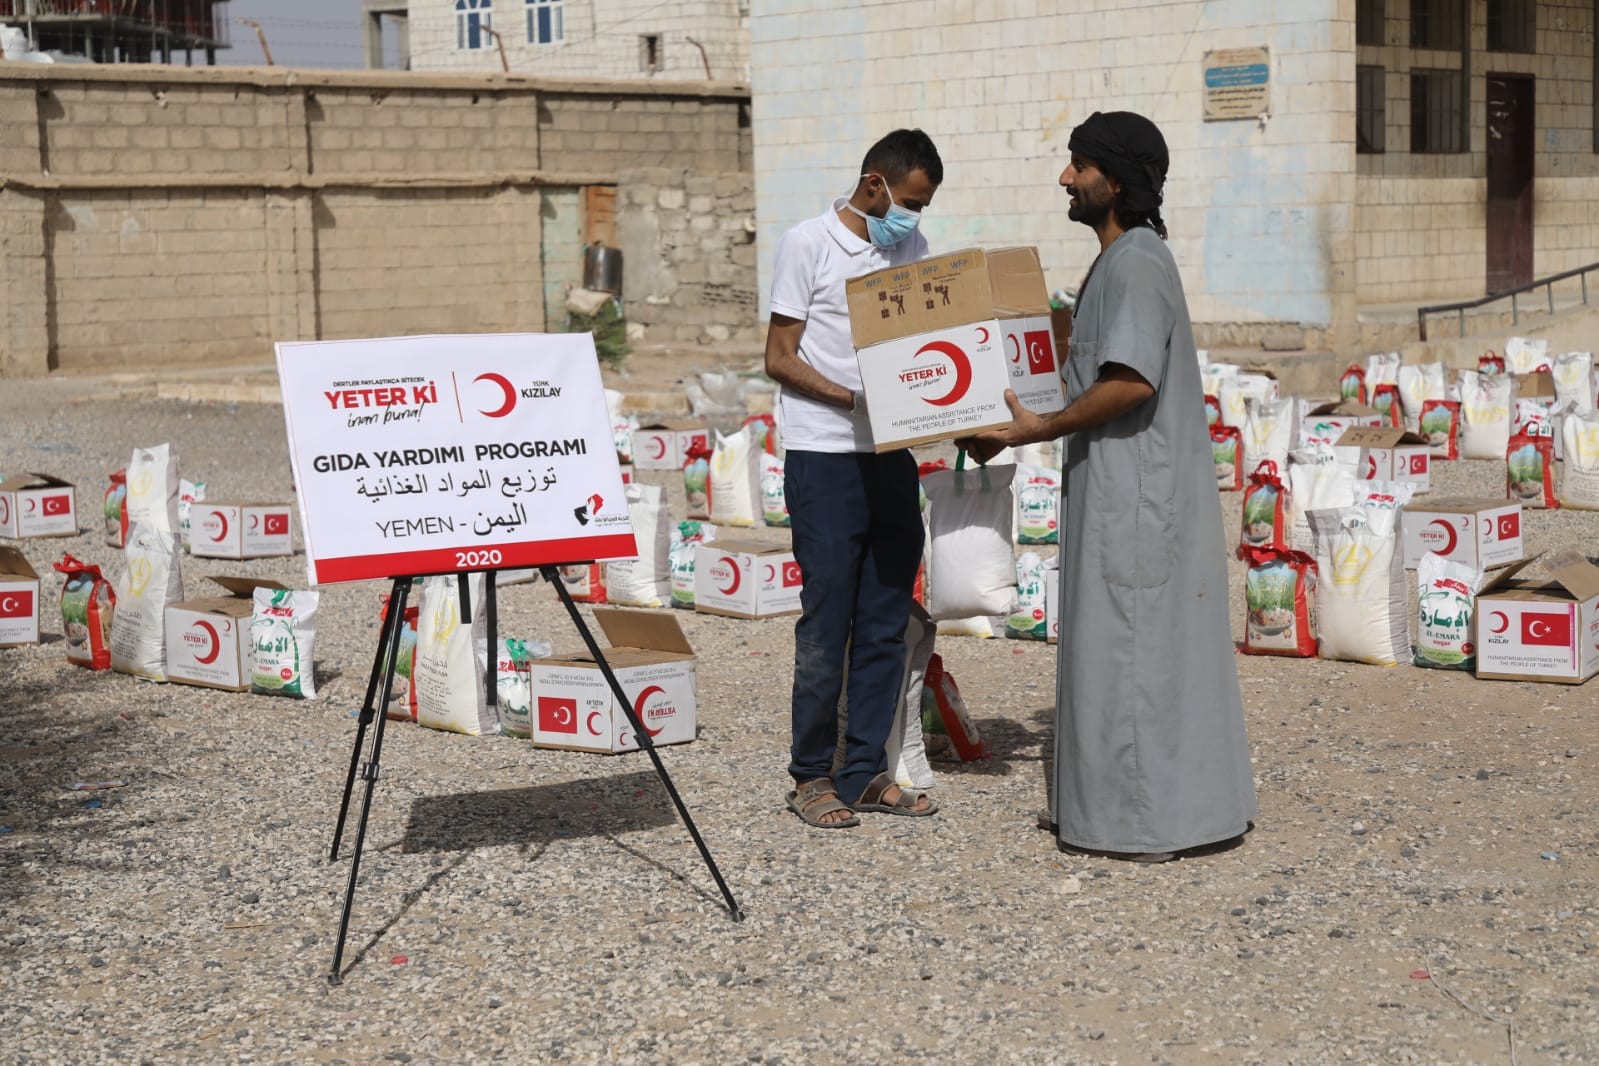 Turkish Red Crescent distributes food aid in Yemen amid virus